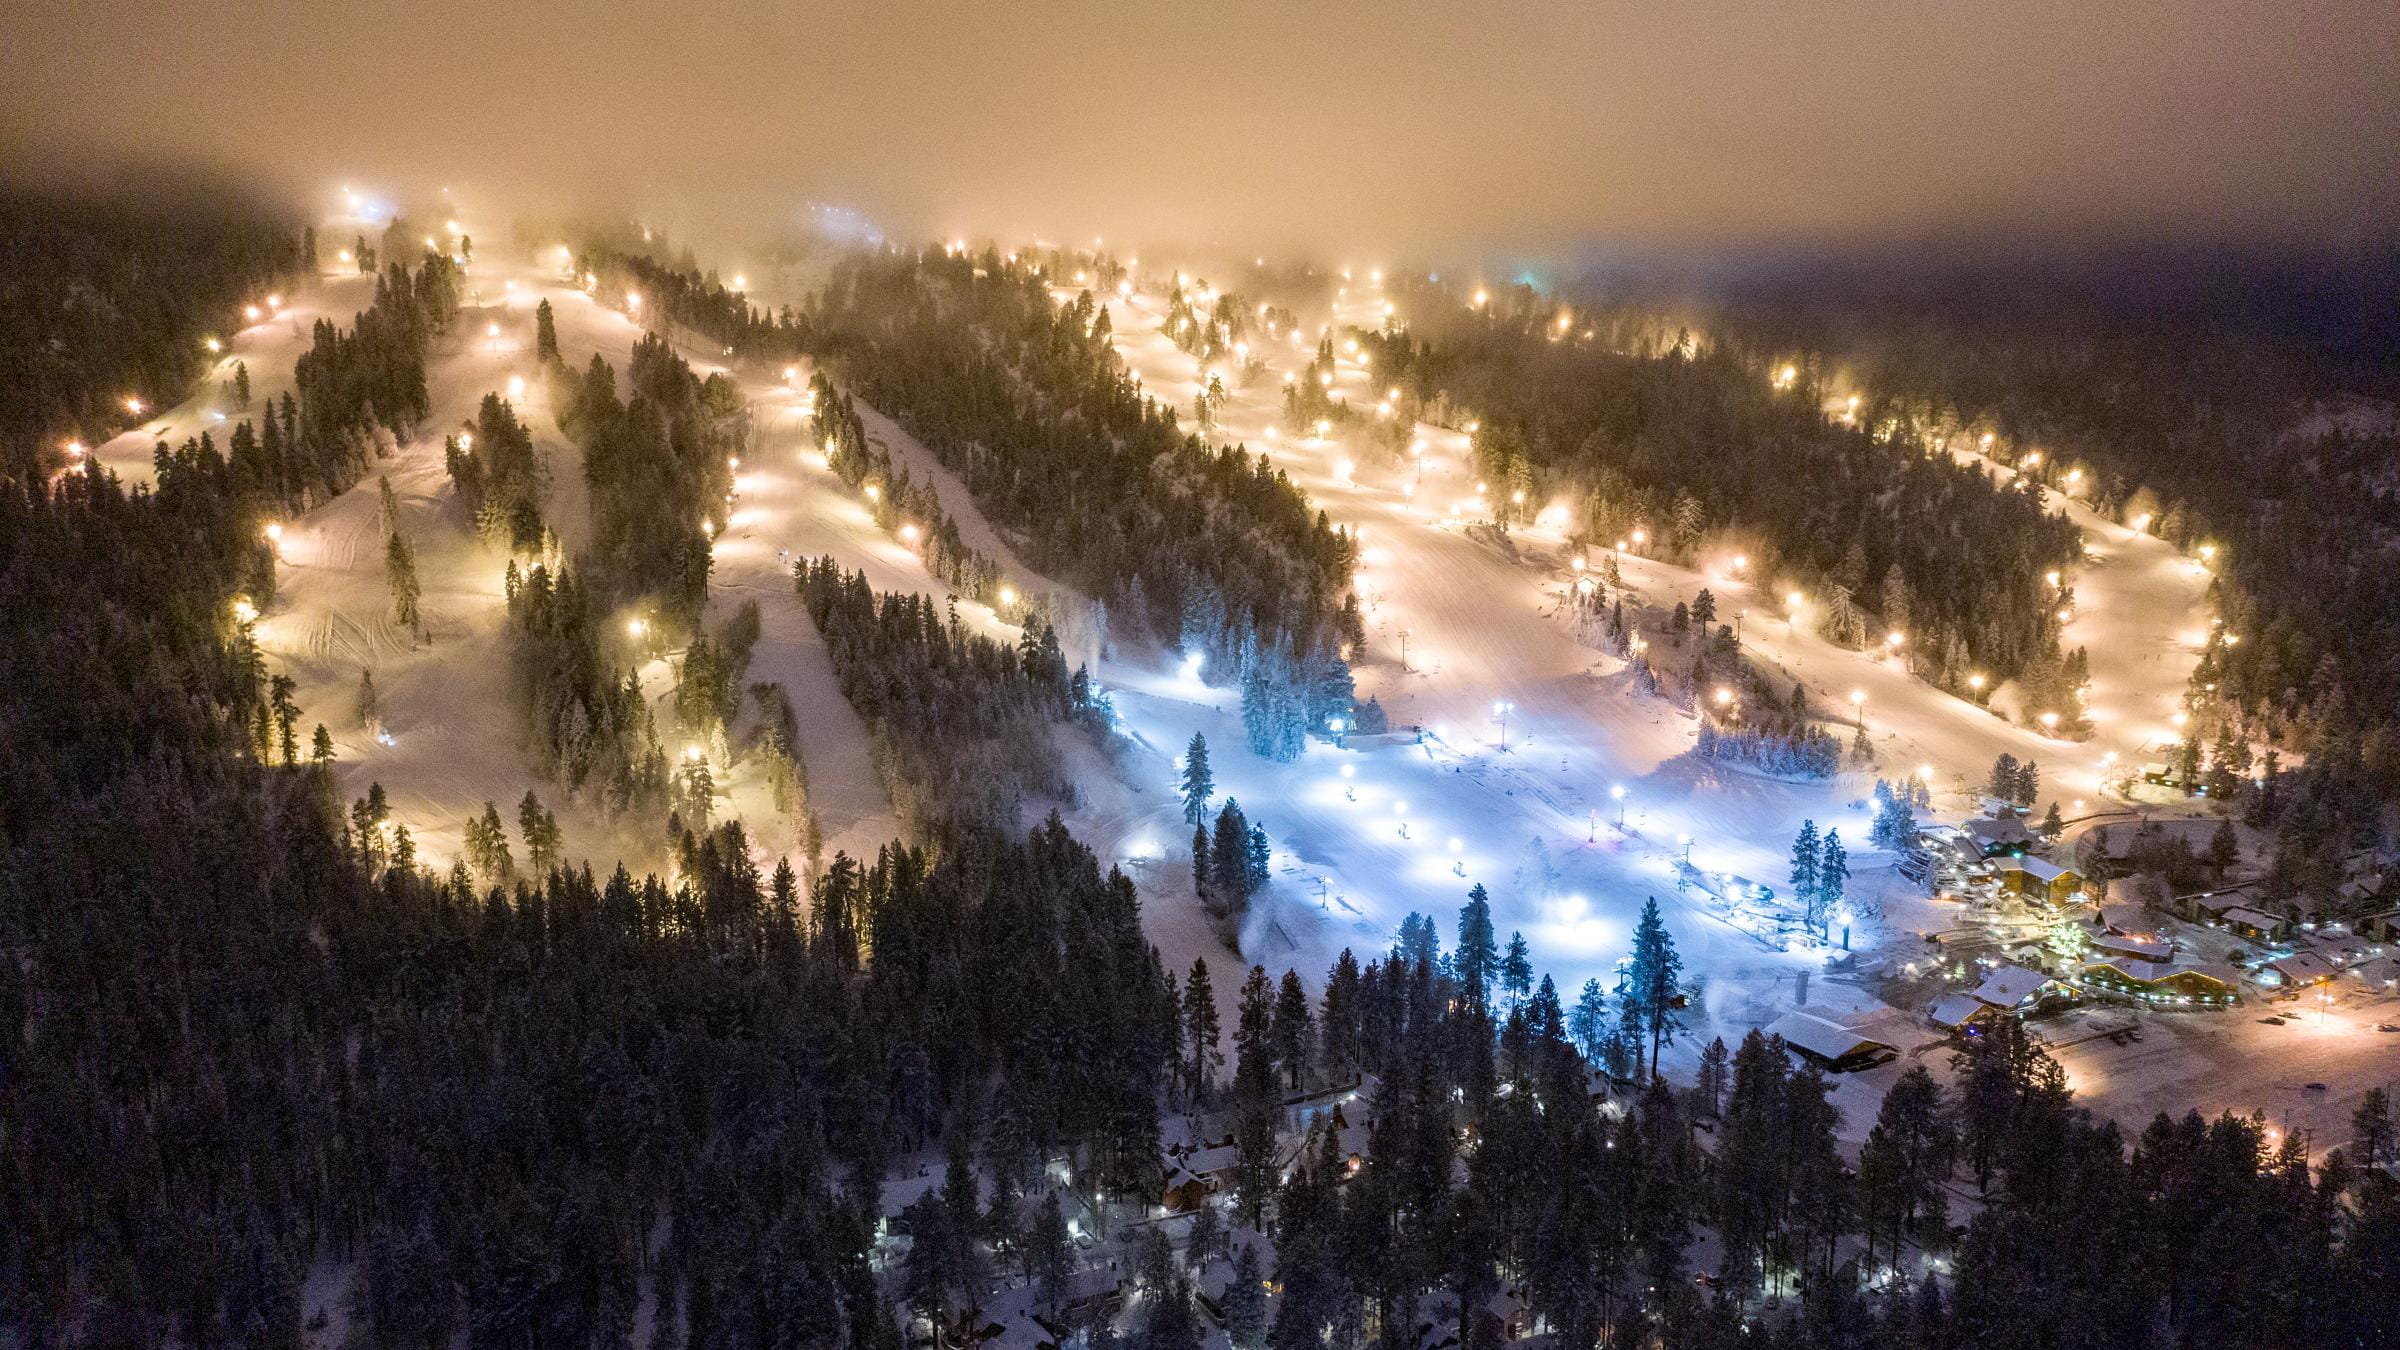 Drone night scenic of Snow Summit